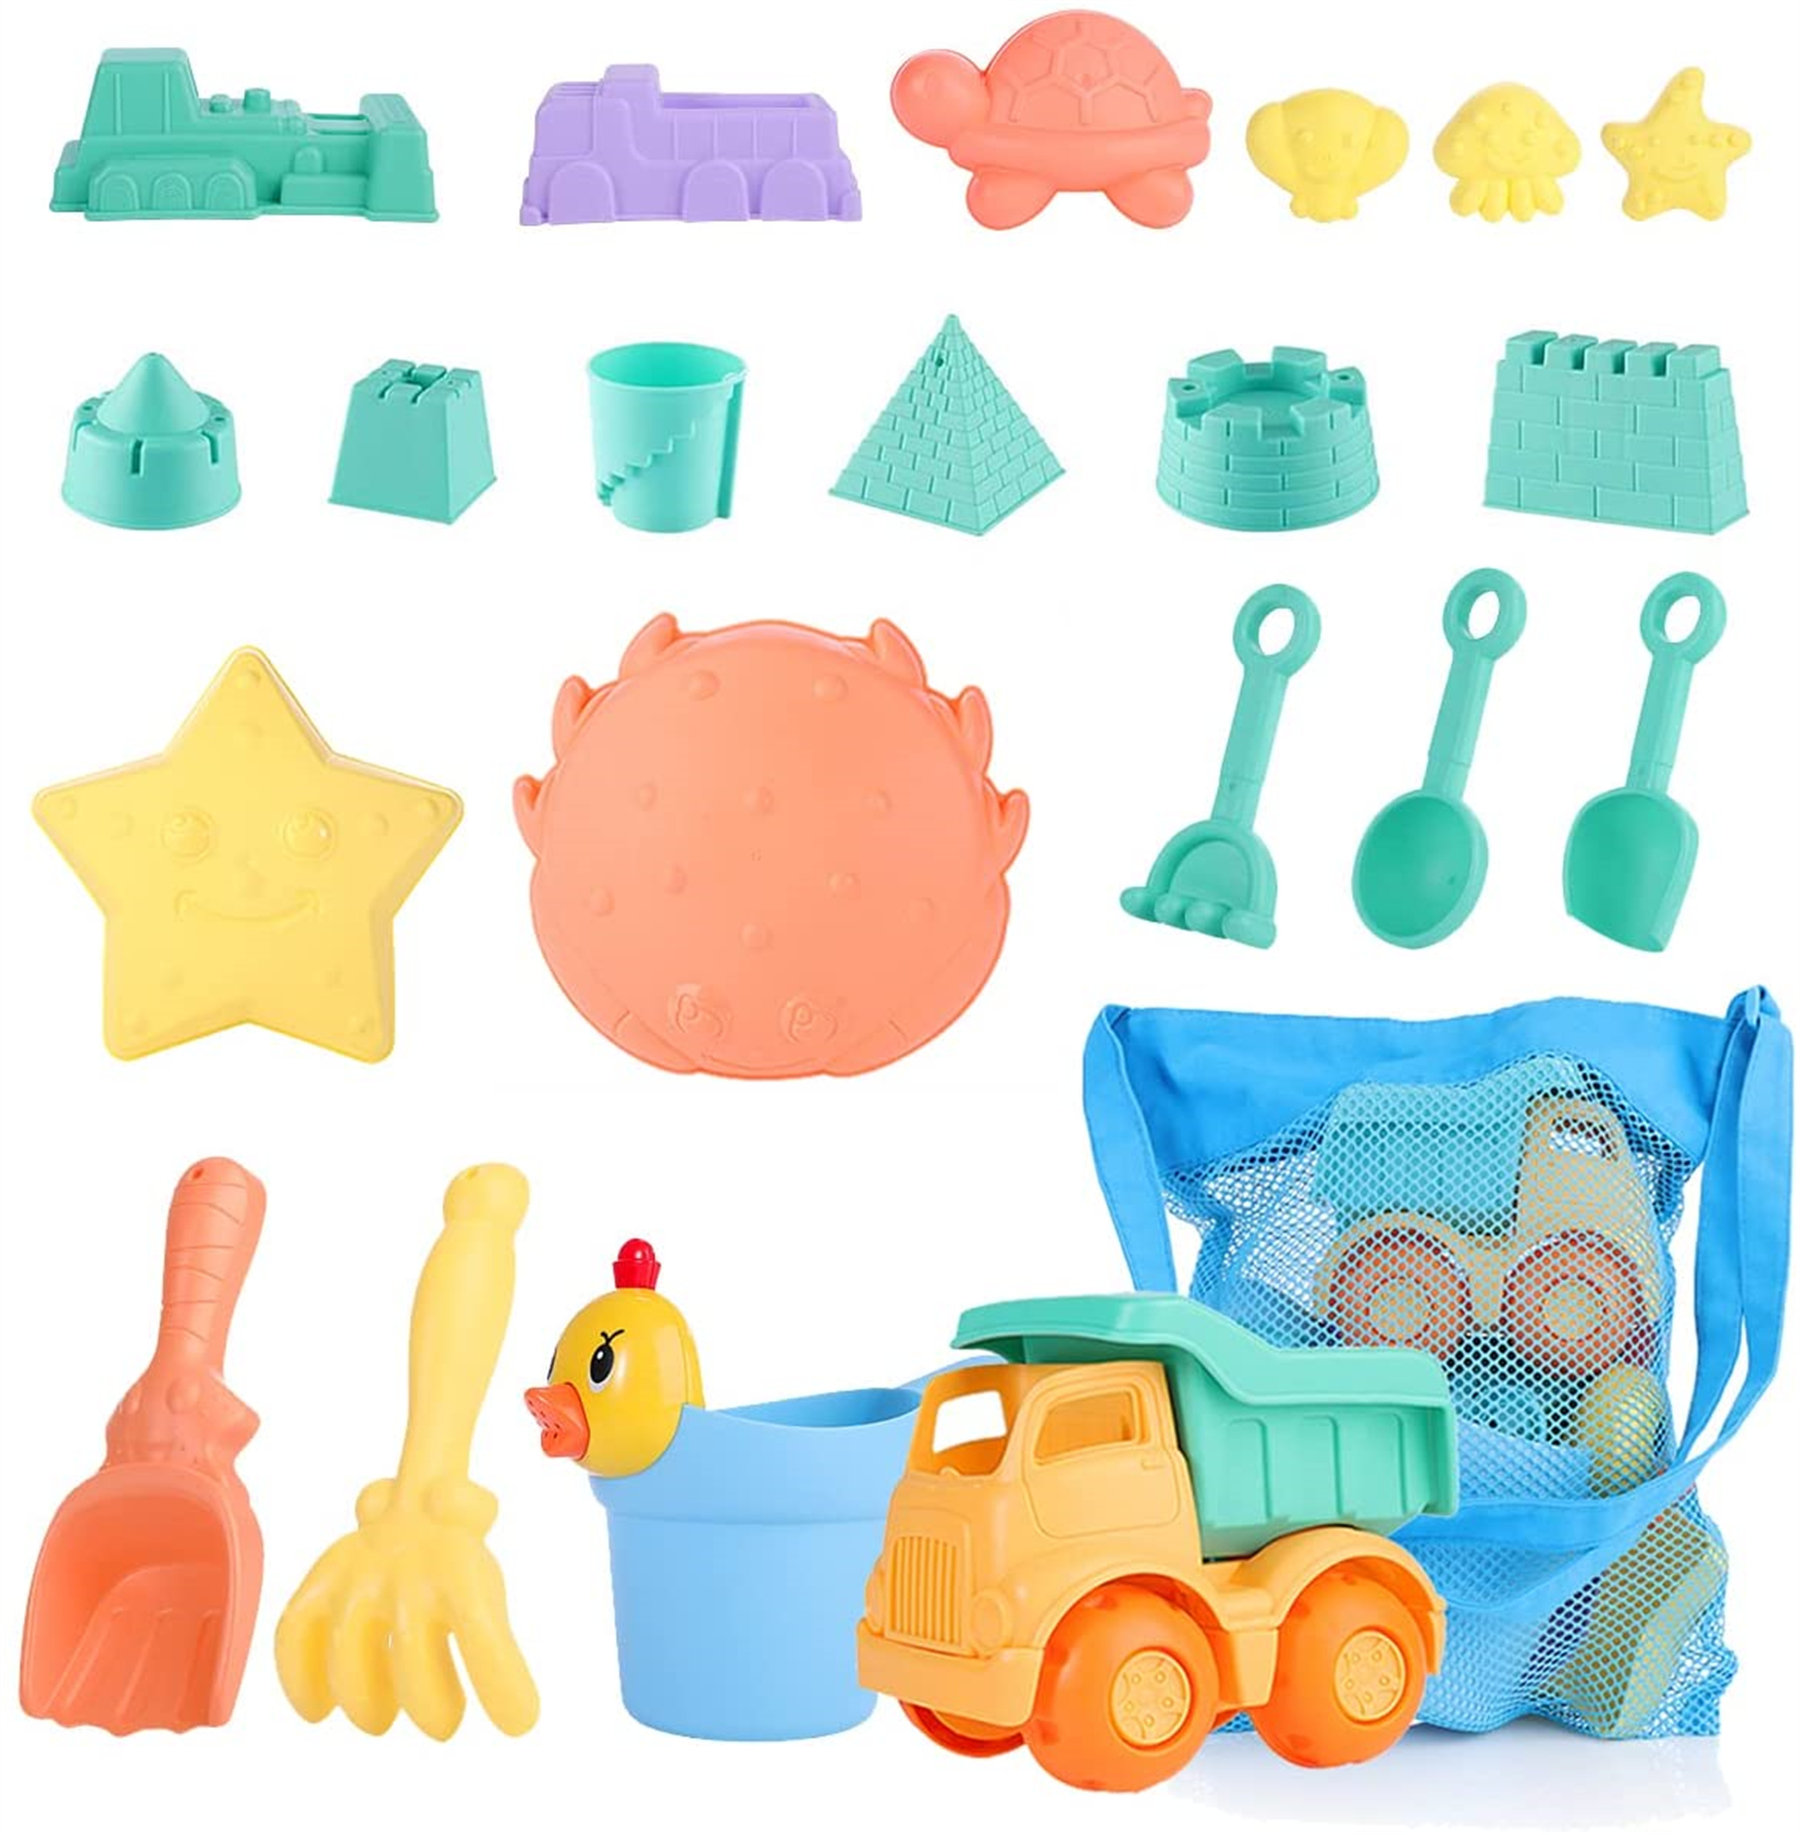 Beach Toys Includes Sand Toys Castle Sandbox Mesh Bag Shovels Fun Outdoor Games Beach Toys for Toddlers Kids Boys Girls Animal Molds Beach Sand Toys Set for Kids Rakes 